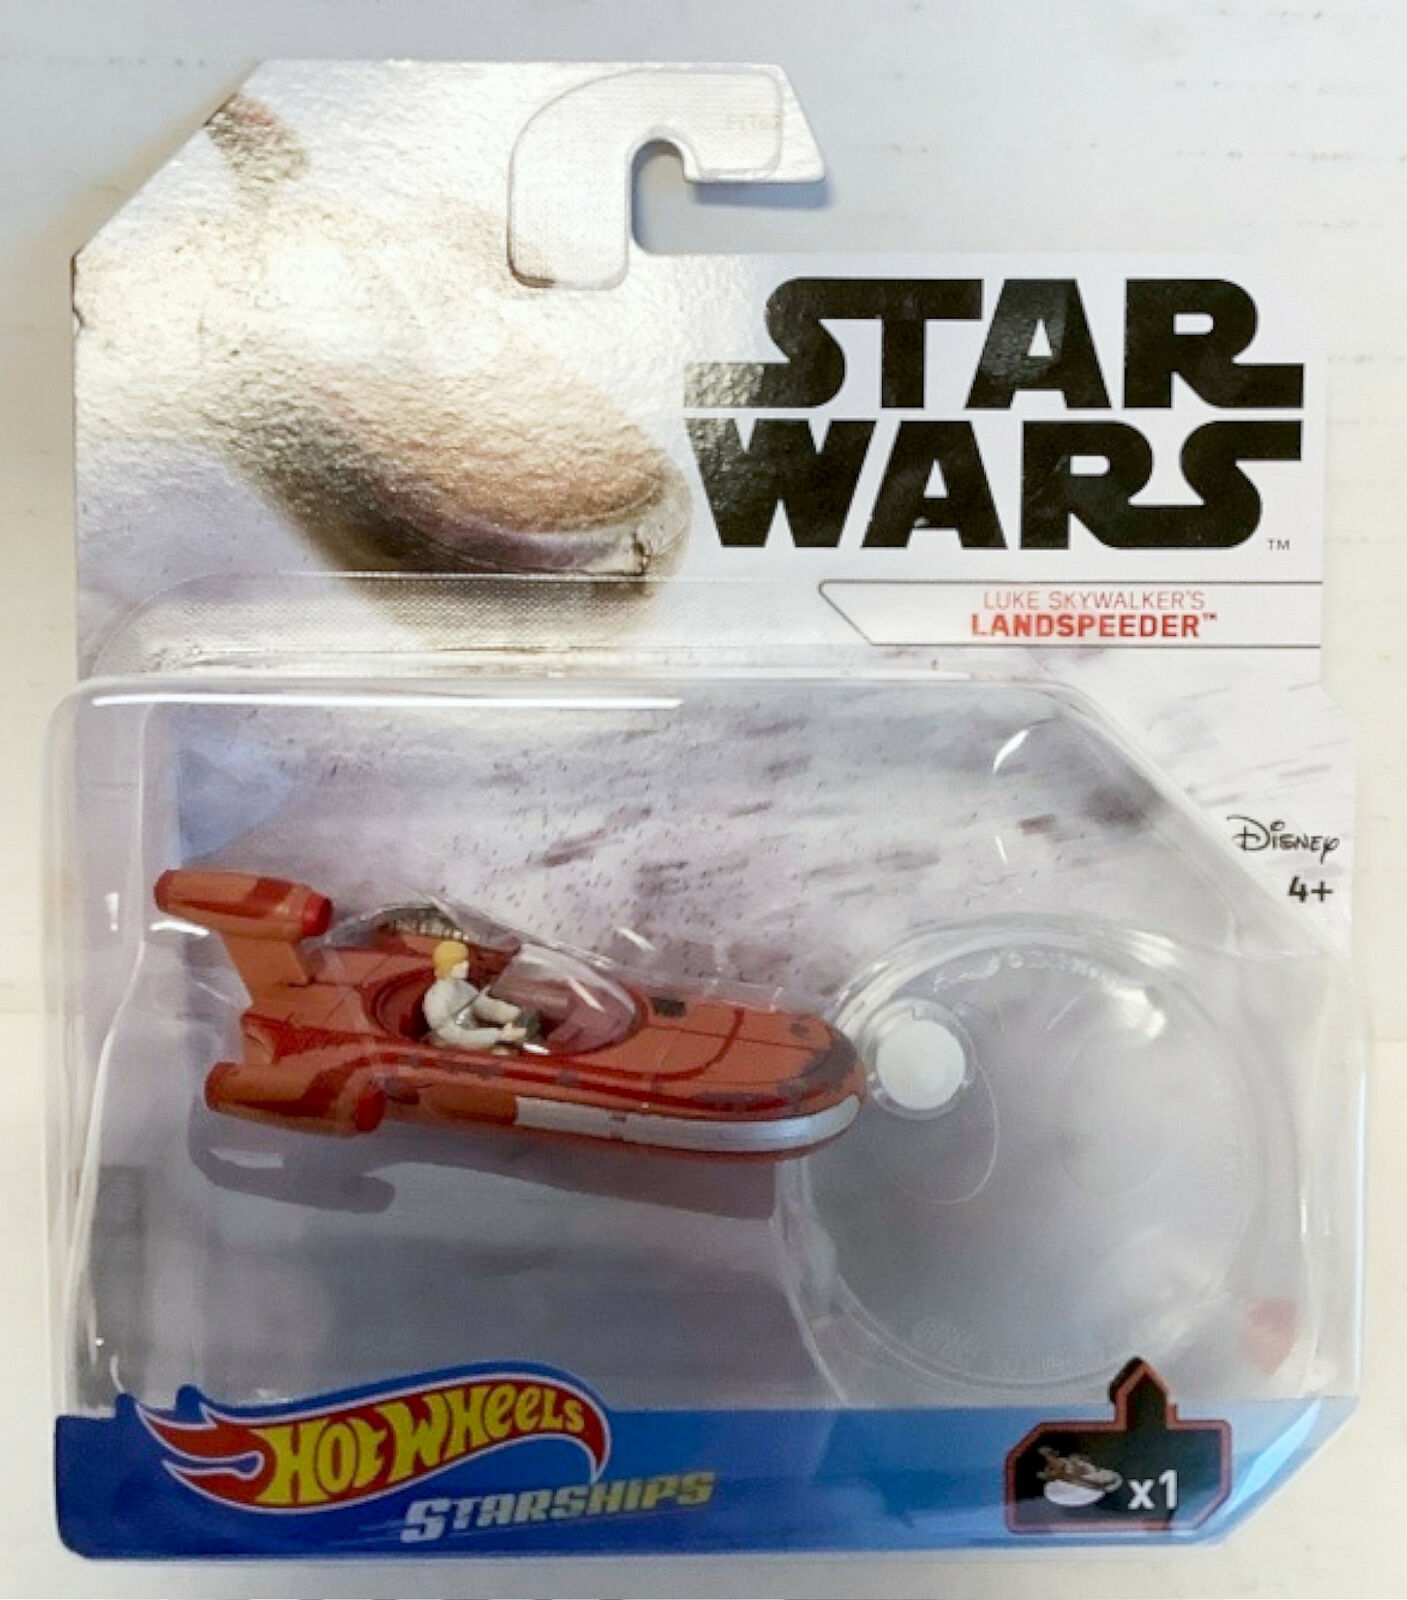 NEW Mattel Hot Wheels Starships Star Wars LUKE SKYWALKER'S LANDSPEEDER Die-Cast